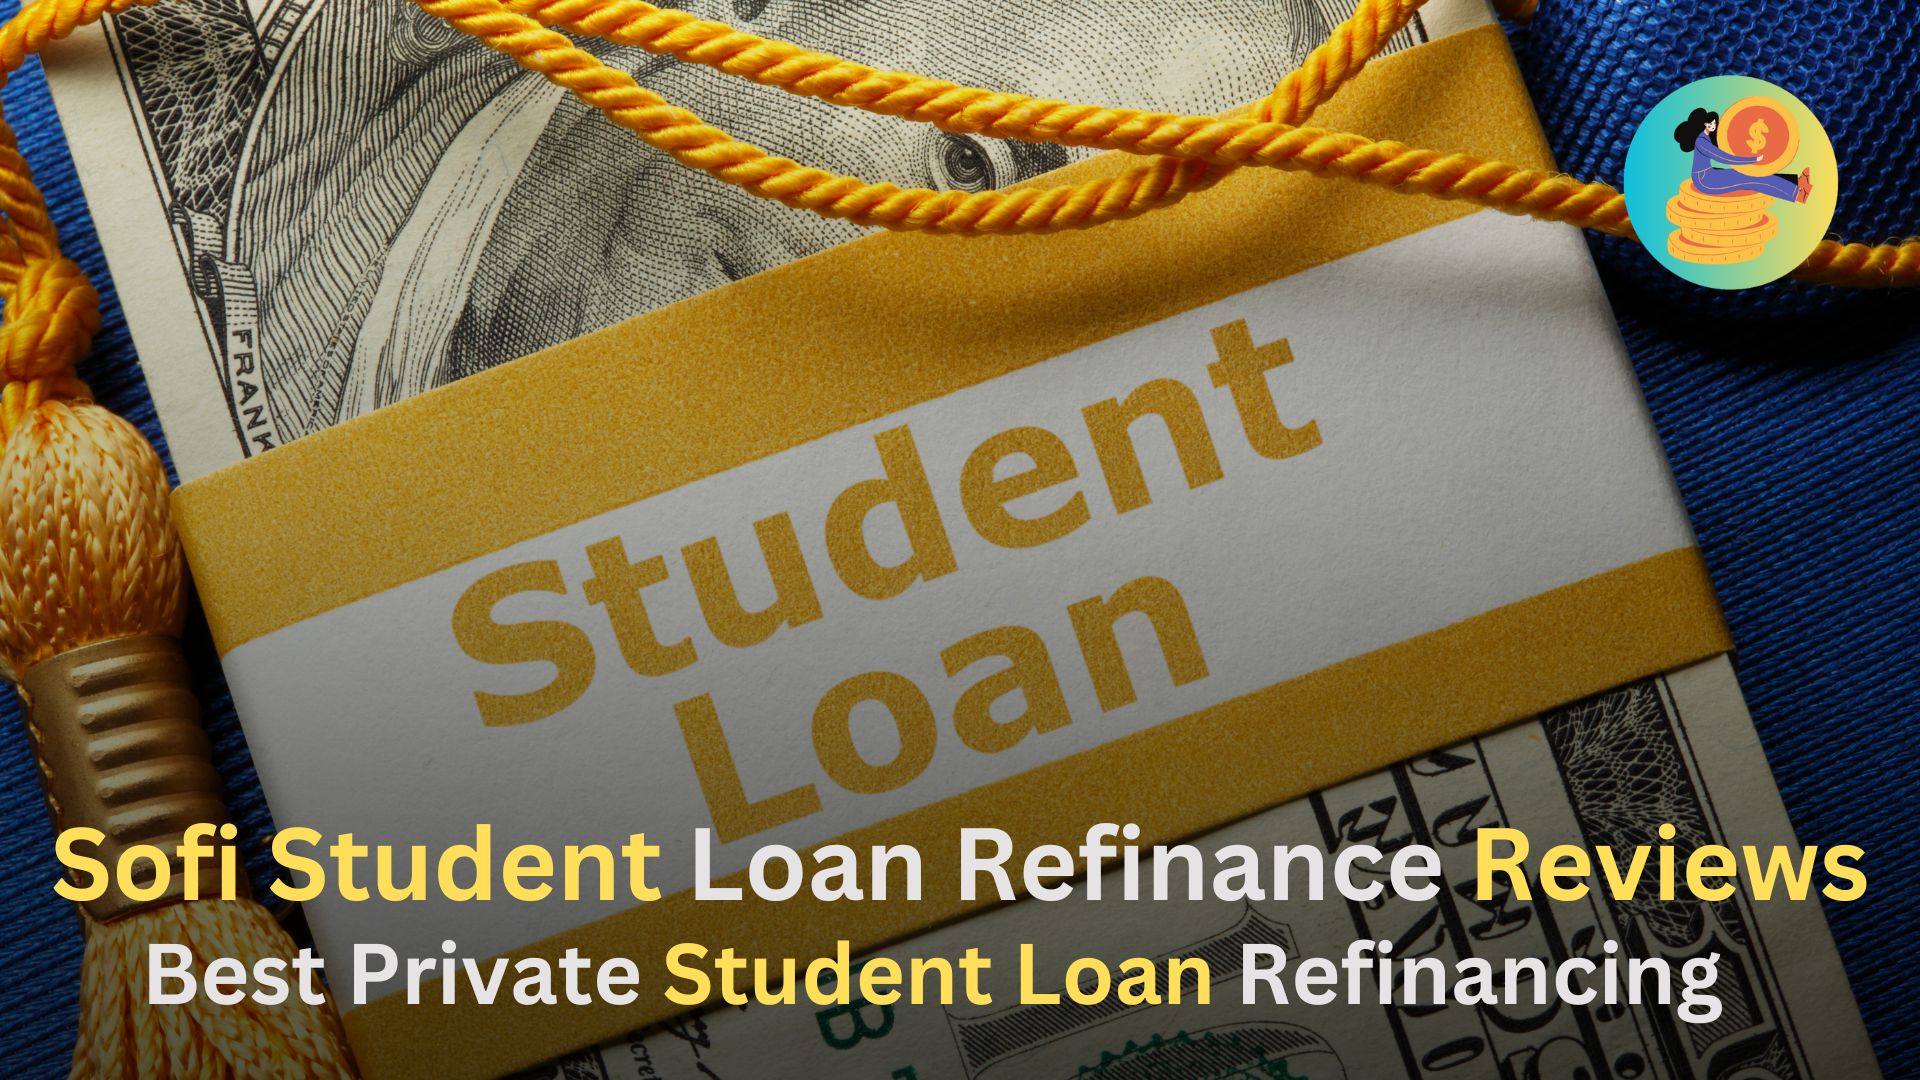 Sofi Student Loan Refinance Reviews,Best Private Student Loan Platform